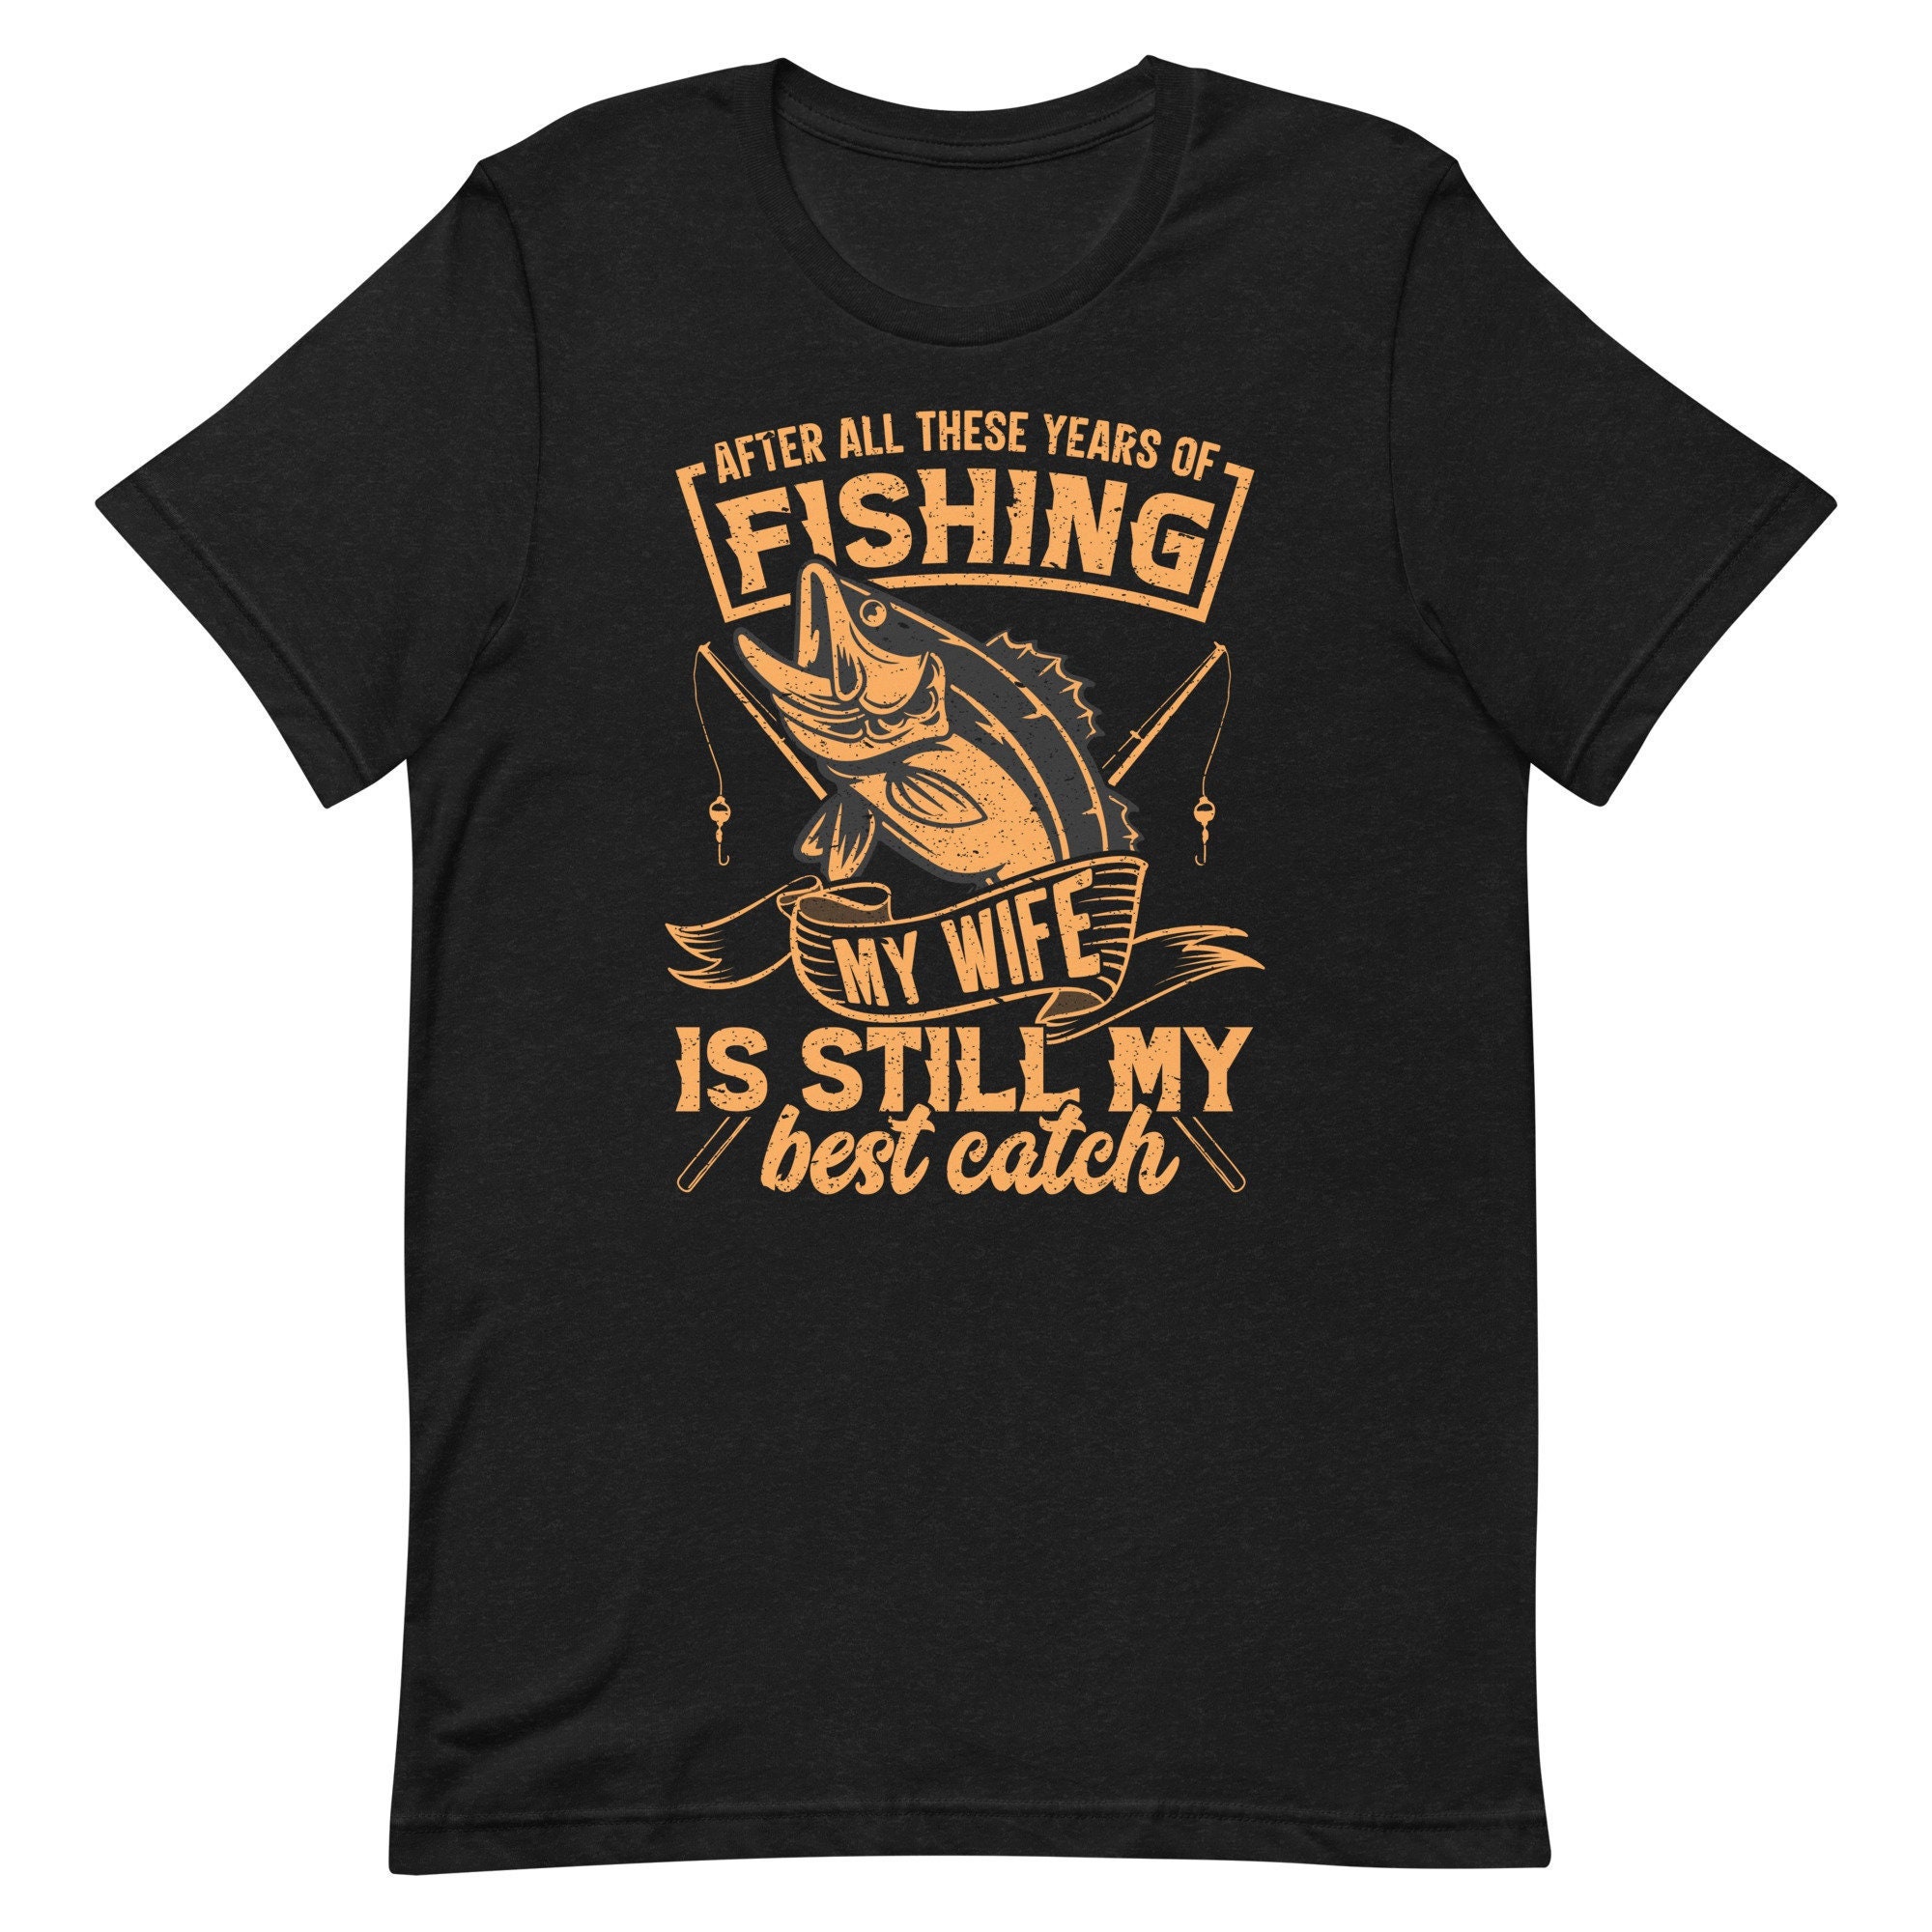 Mens XL Fishing Shirt O-Fish-Ally Best Dad Ever T Shirt Funny Short Sleeve